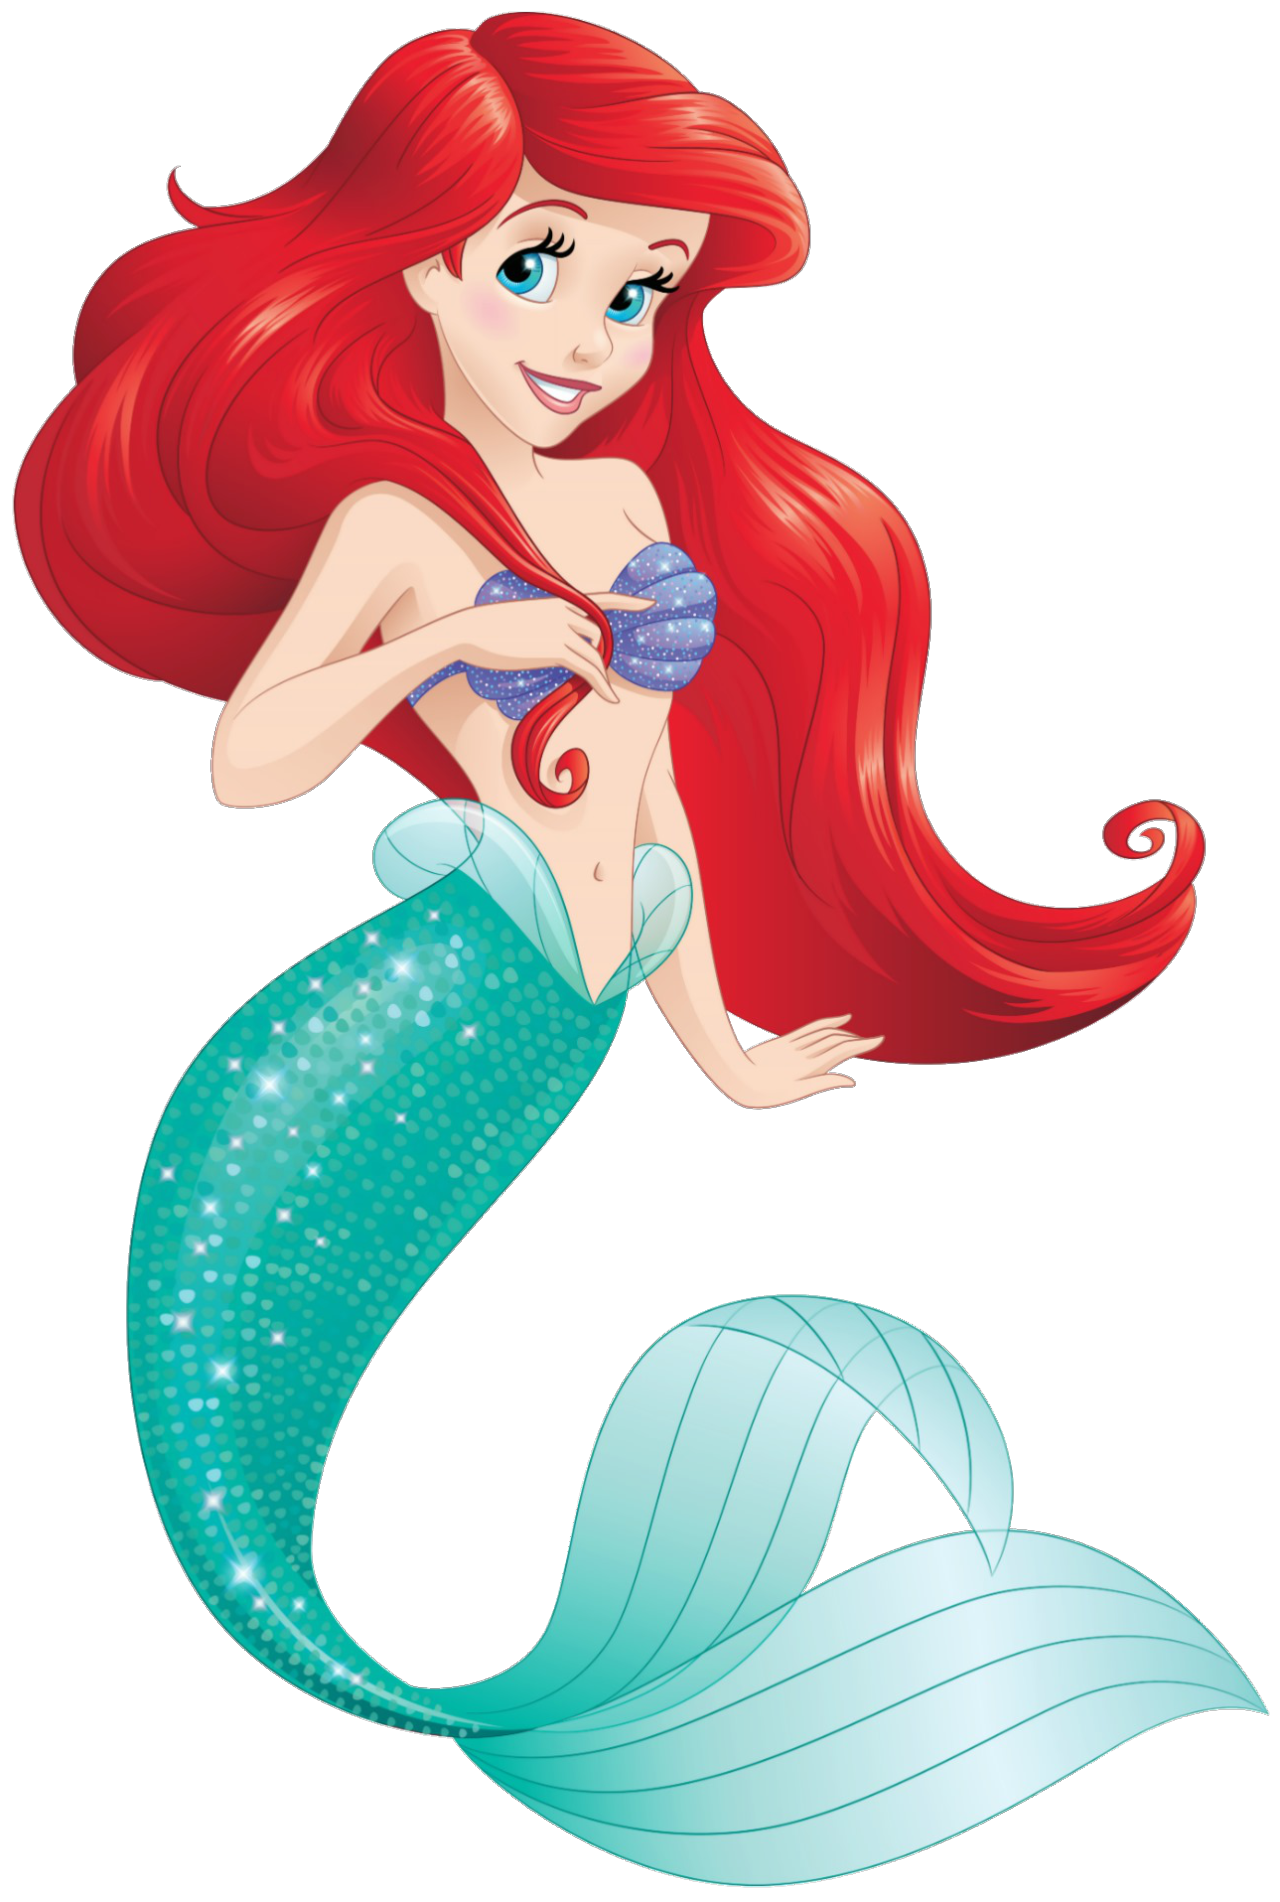 Principessa Ariel